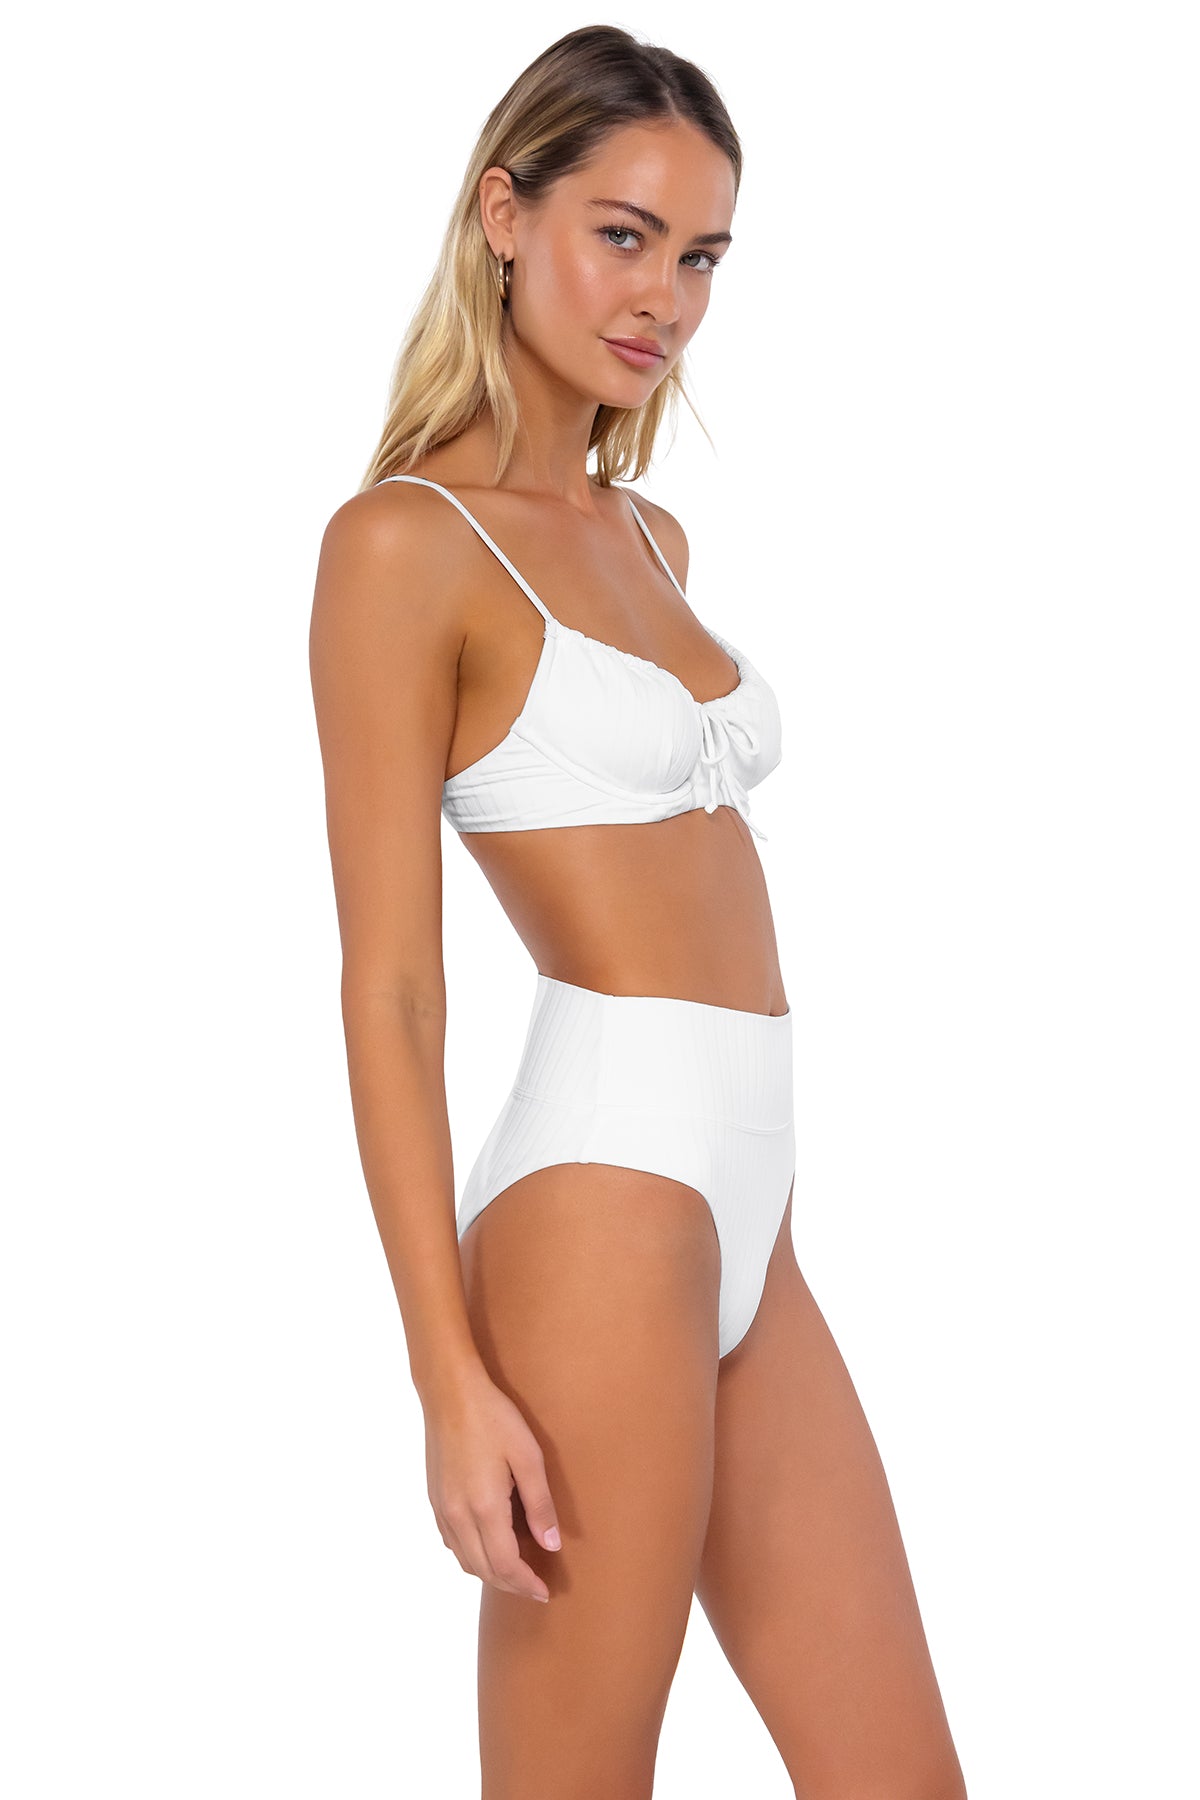 Side pose #1 of Jessica wearing Swim Systems Magnolia Bay Rib Tatum Bottom paired with Avila Underwire shirred bikini